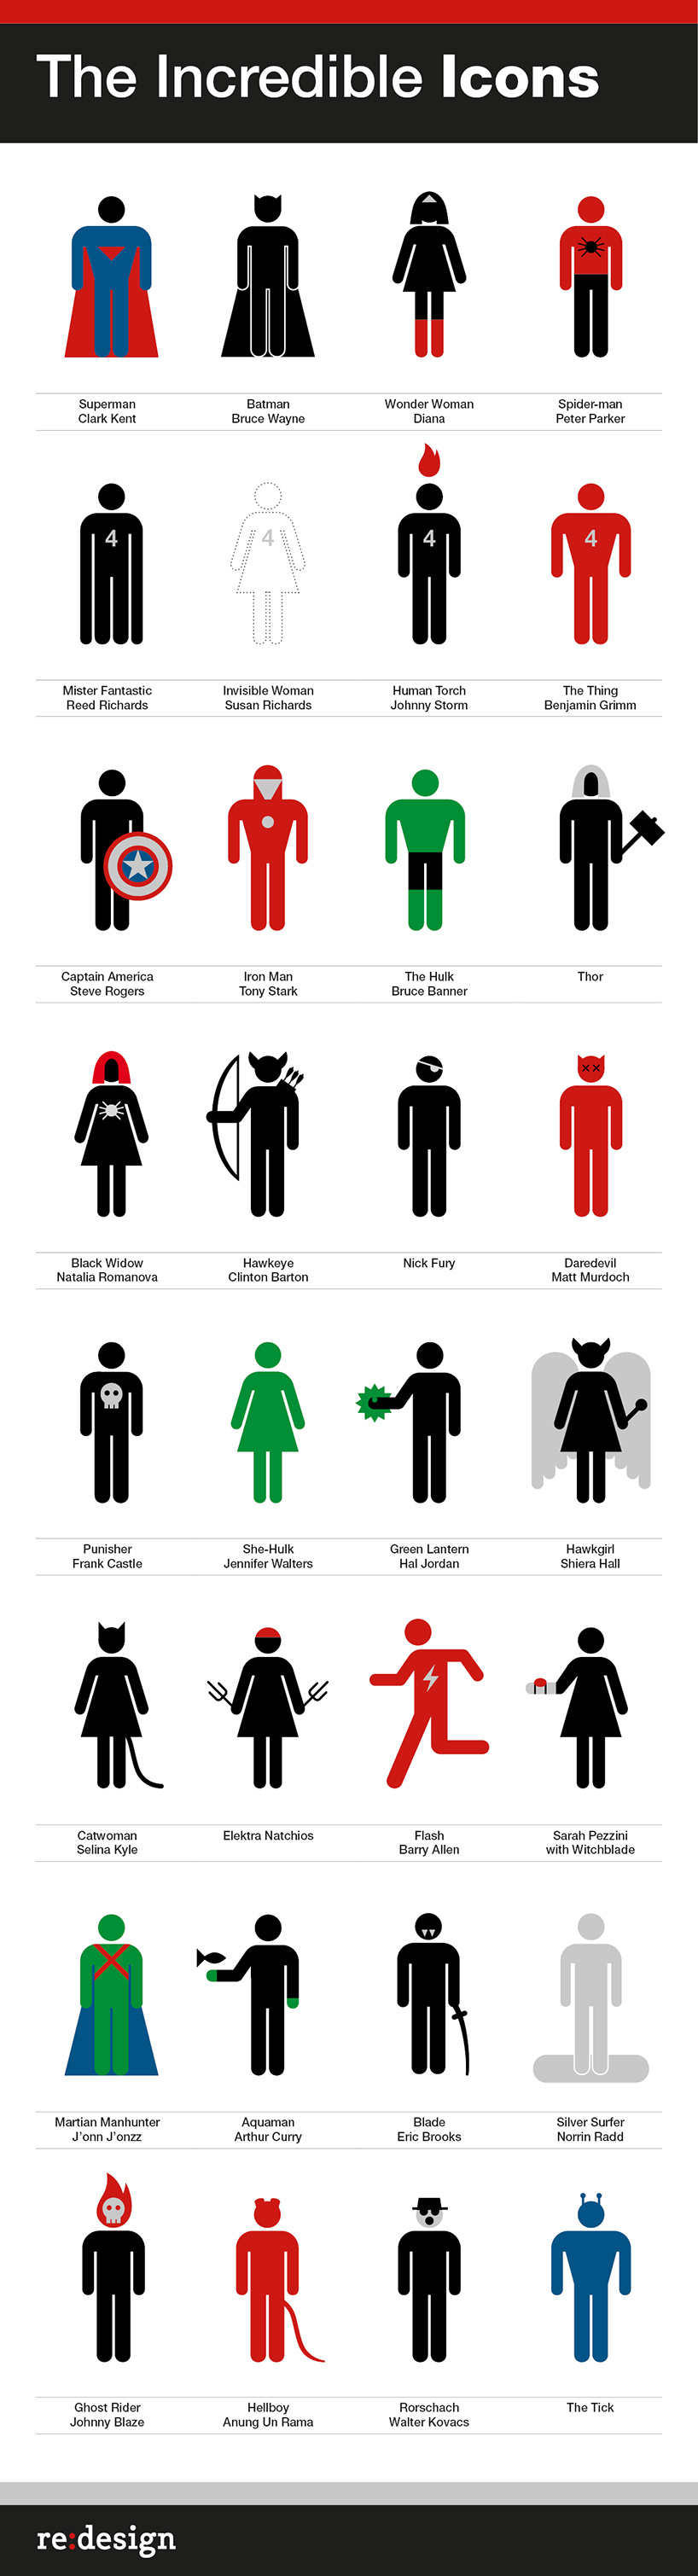 re:design: superheroes + supervillains icons